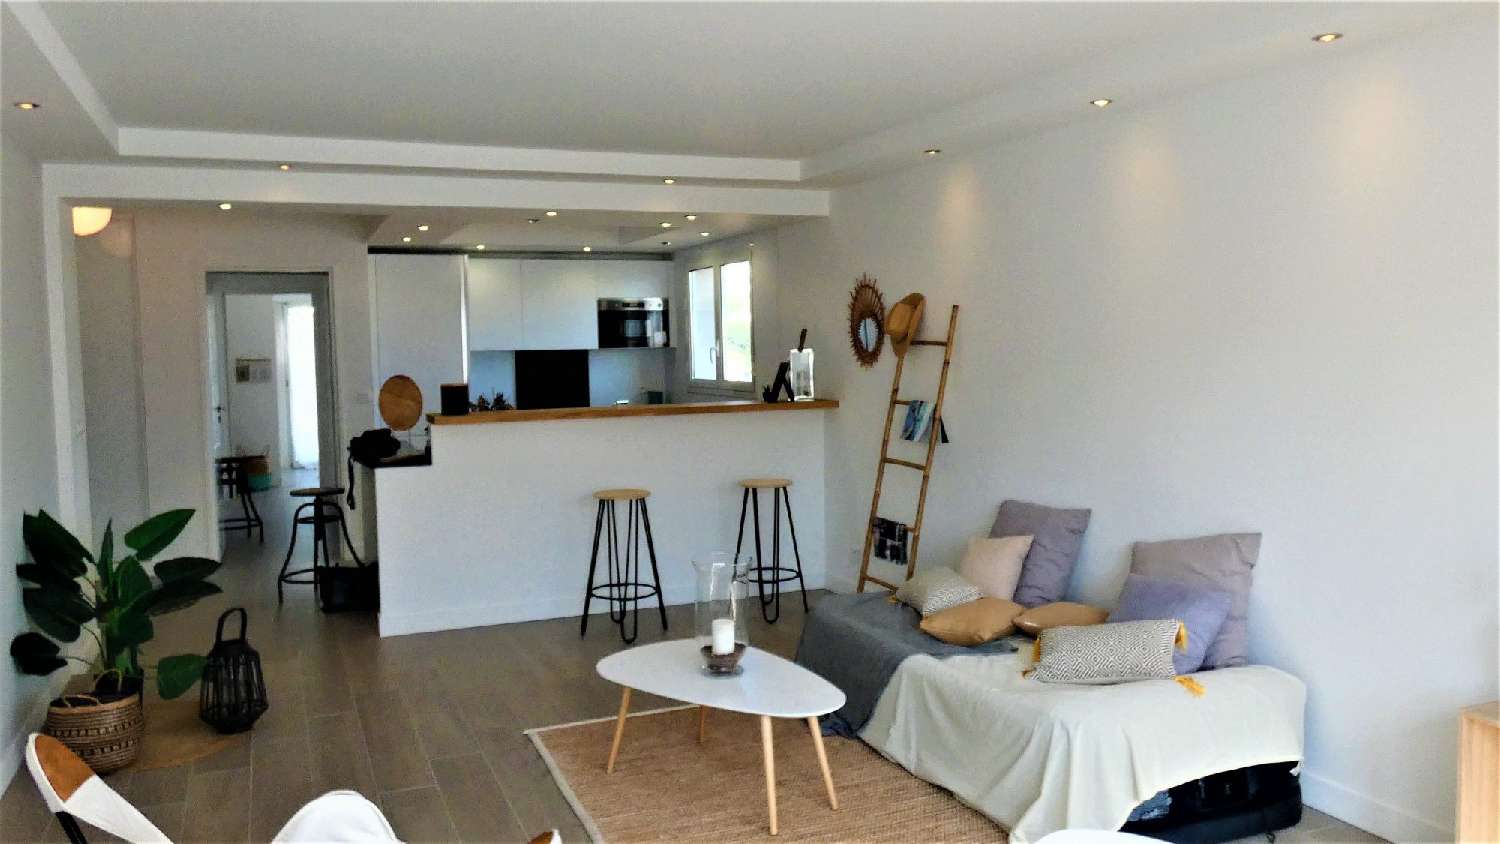 Le Cannet Alpes-Maritimes Wohnung/ Apartment Bild 6830824